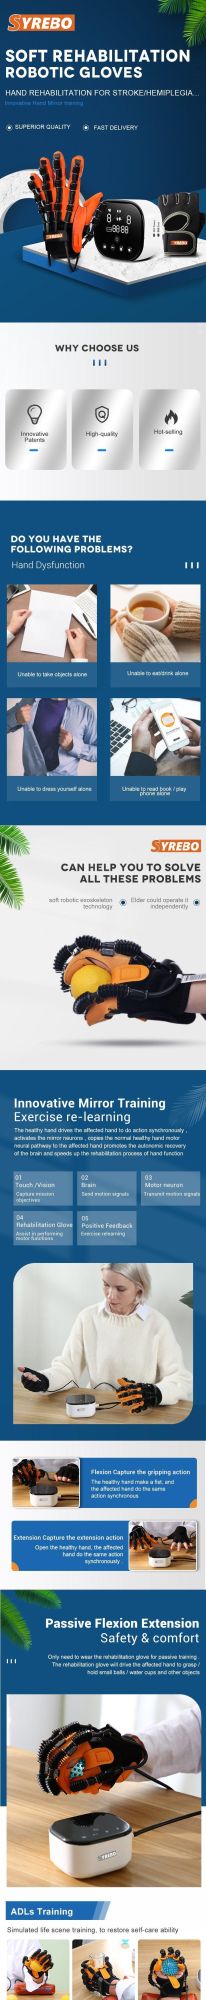 2022 New Hamiplegiya Finger Rehabilitation Trainer Robot Gloves for Stroke Patients